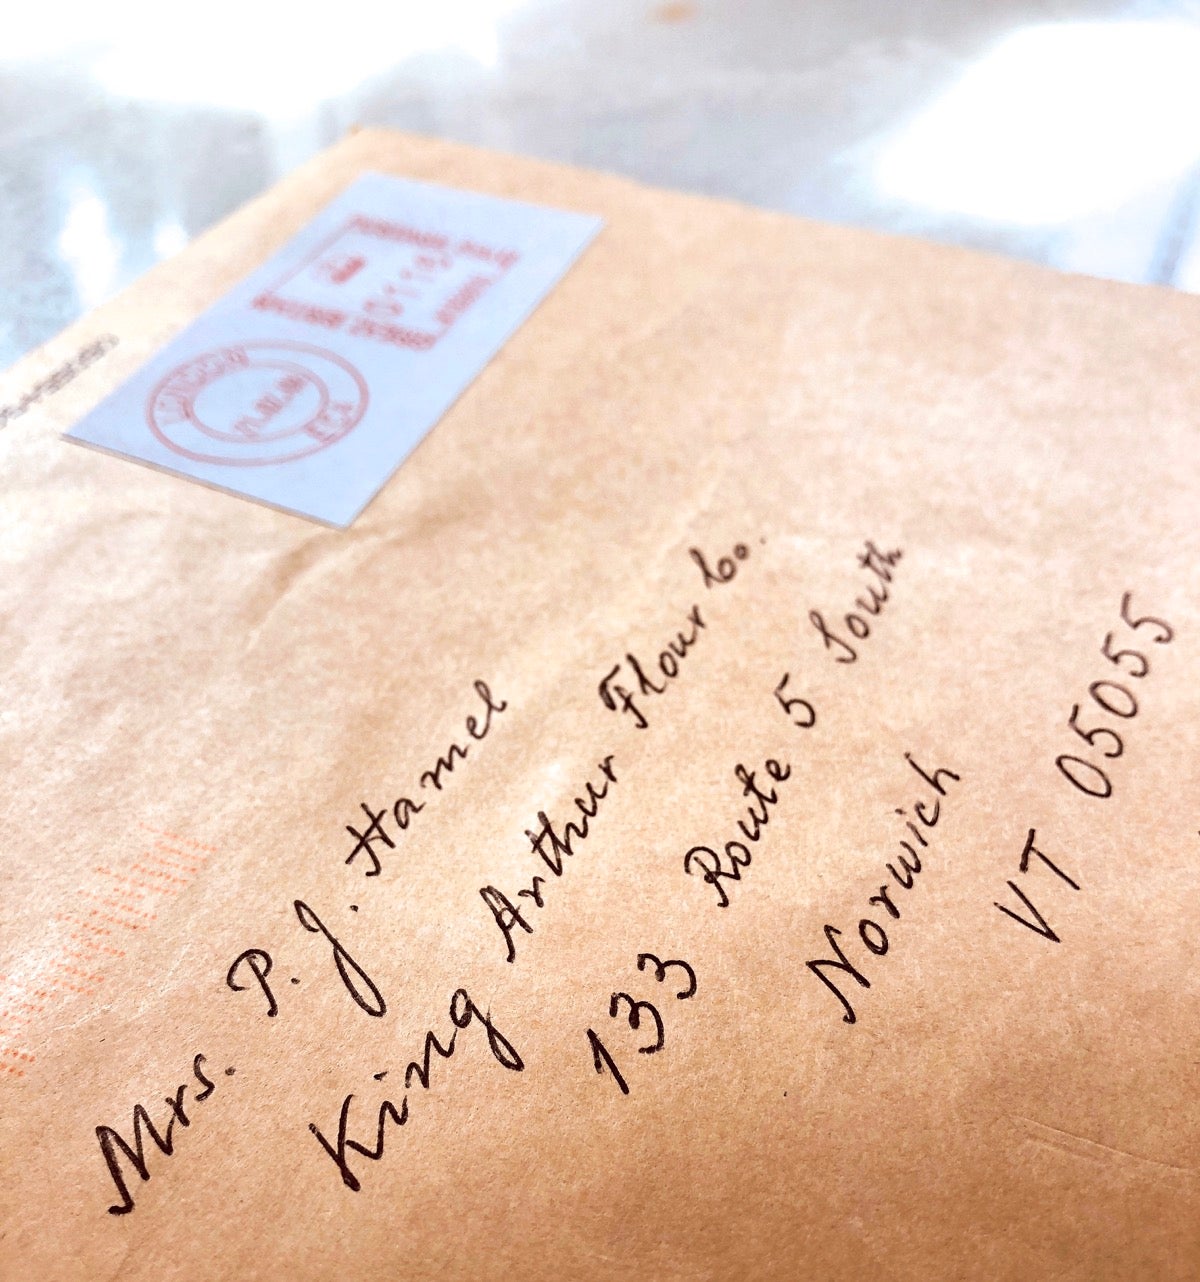 An envelope hand-addressed to King Arthur Flour.